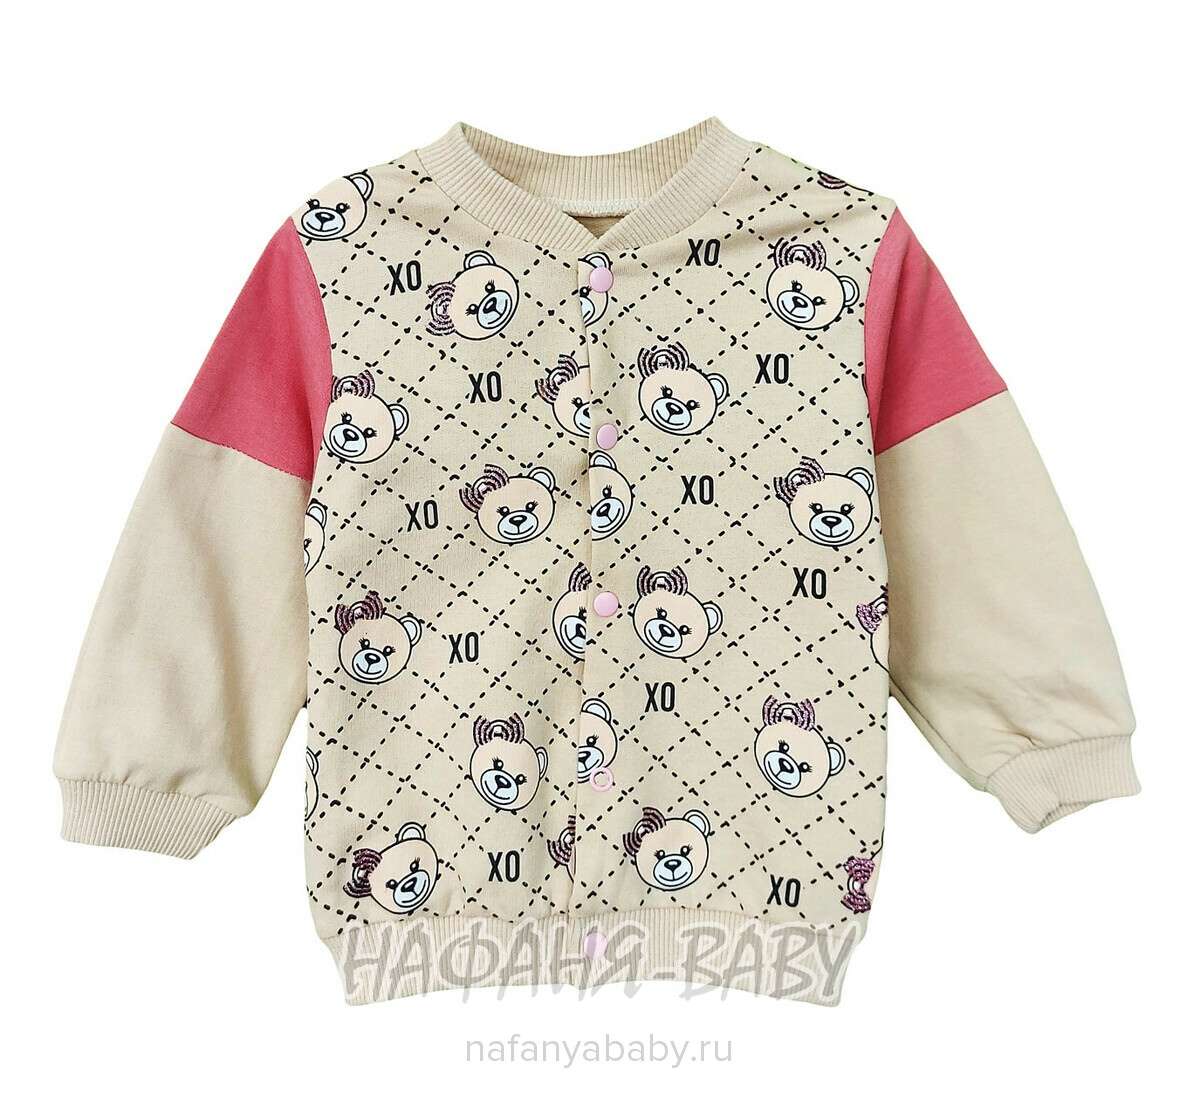 Детский костюм Happy Baby арт. 12024 от 6 до 24 мес, цвет бежевый, оптом Турция